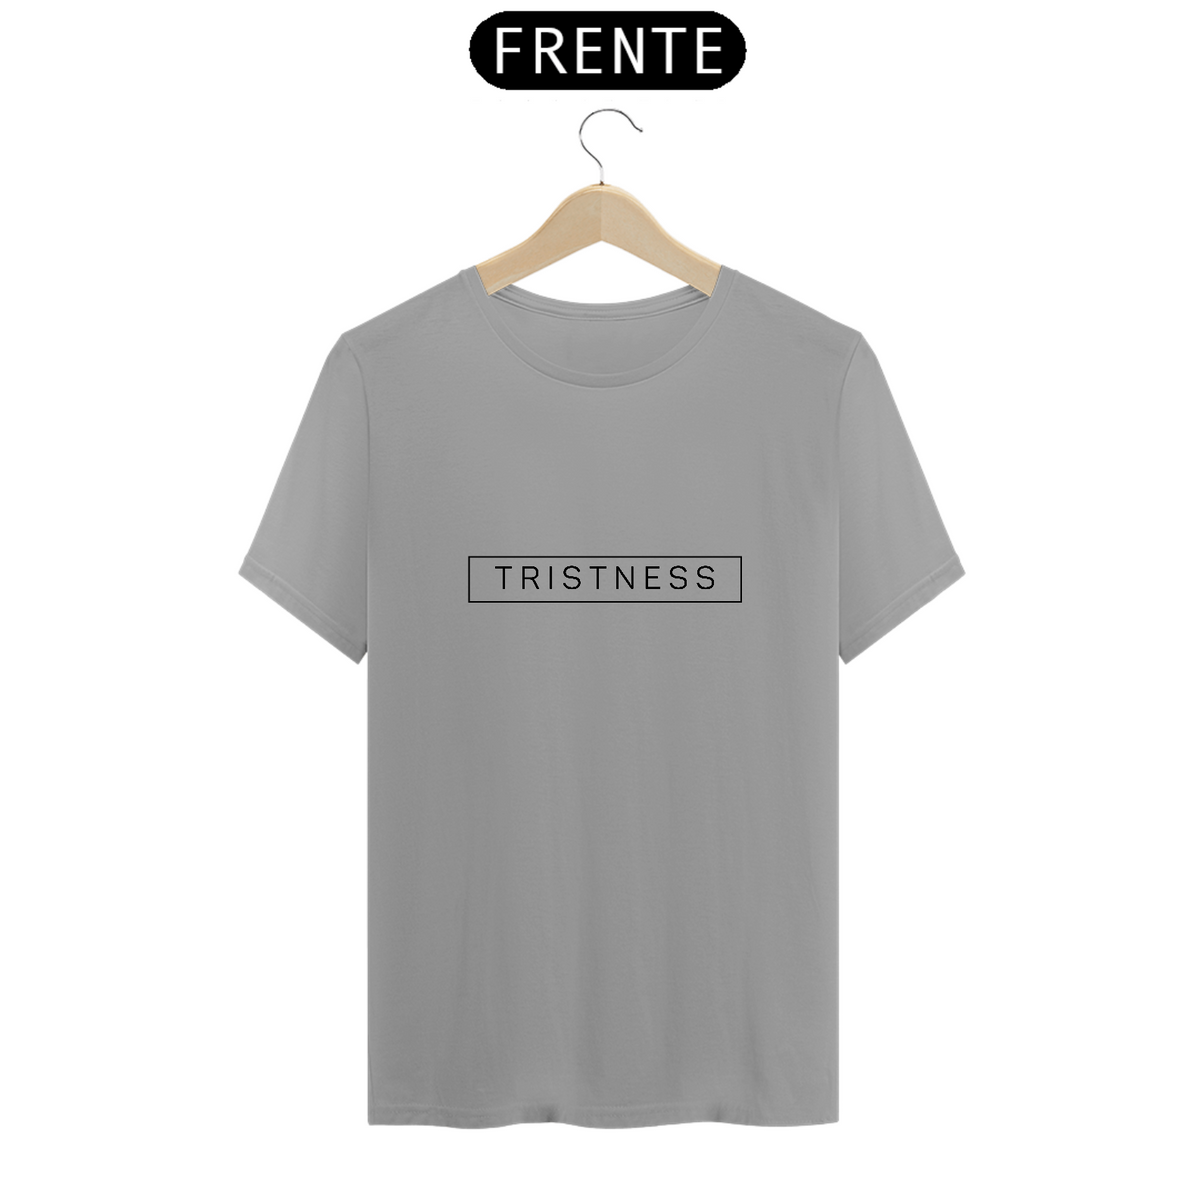 Nome do produto: Camiseta Unissex Tristness